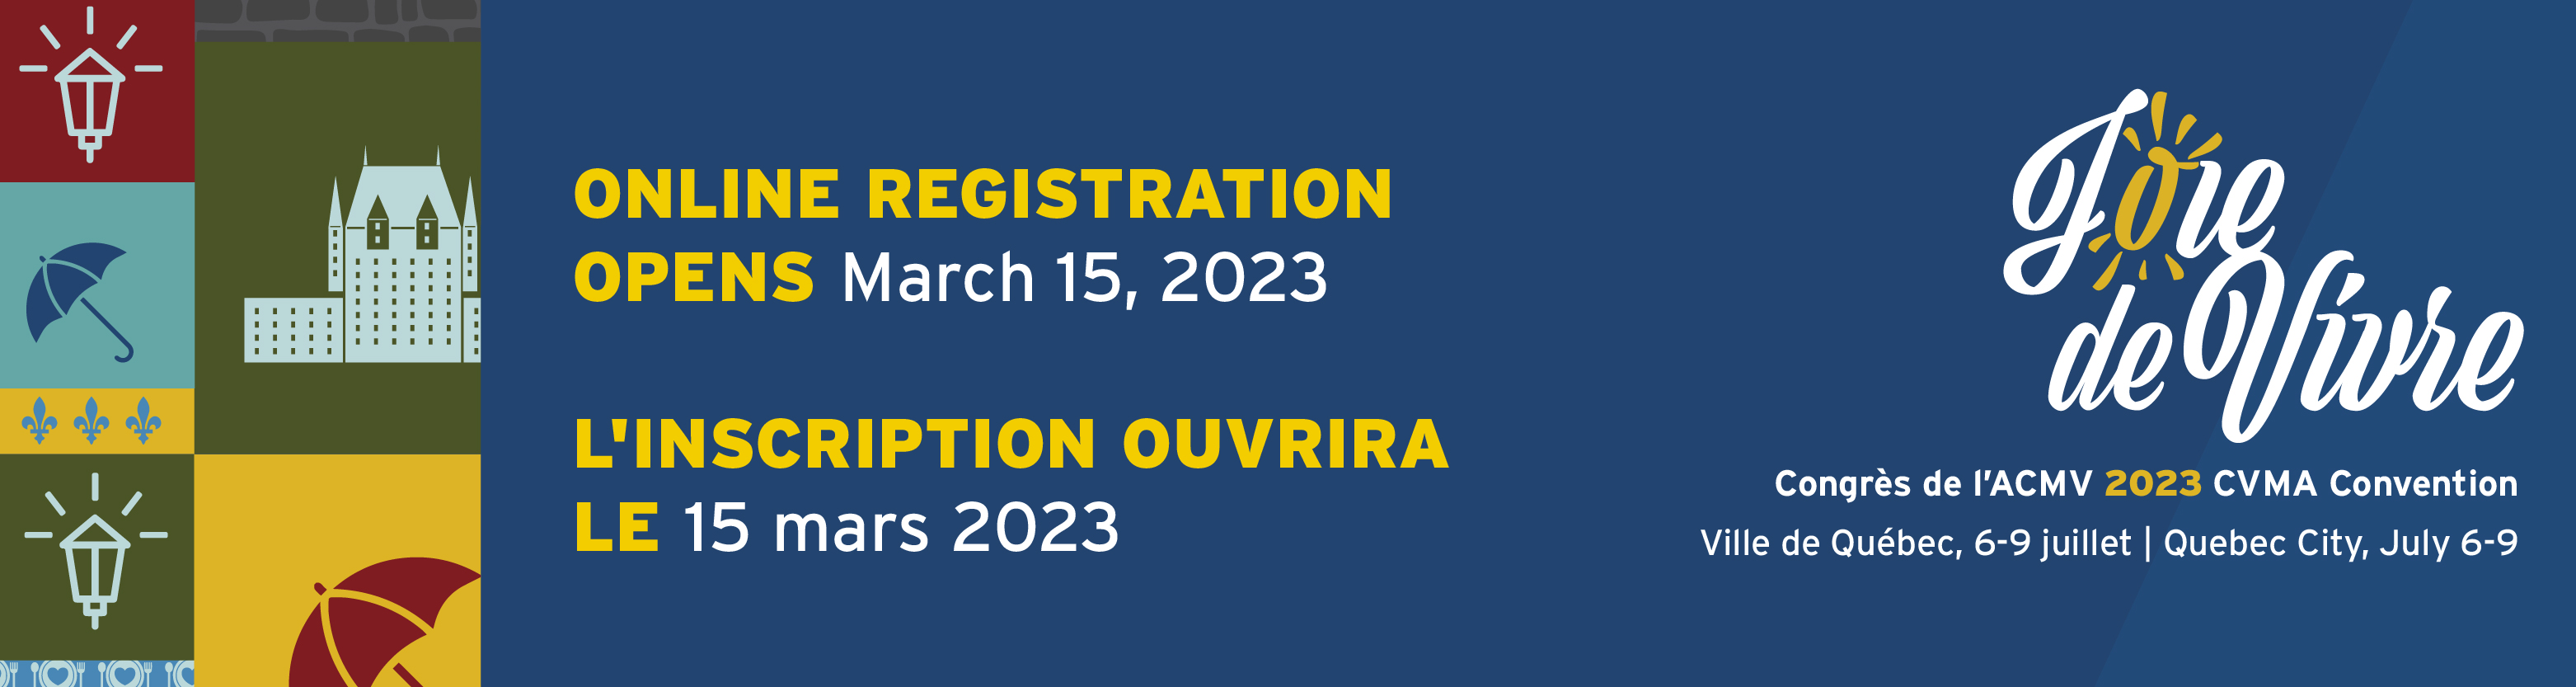 2023 CVMA Convention - online registration opens March 15, 2023